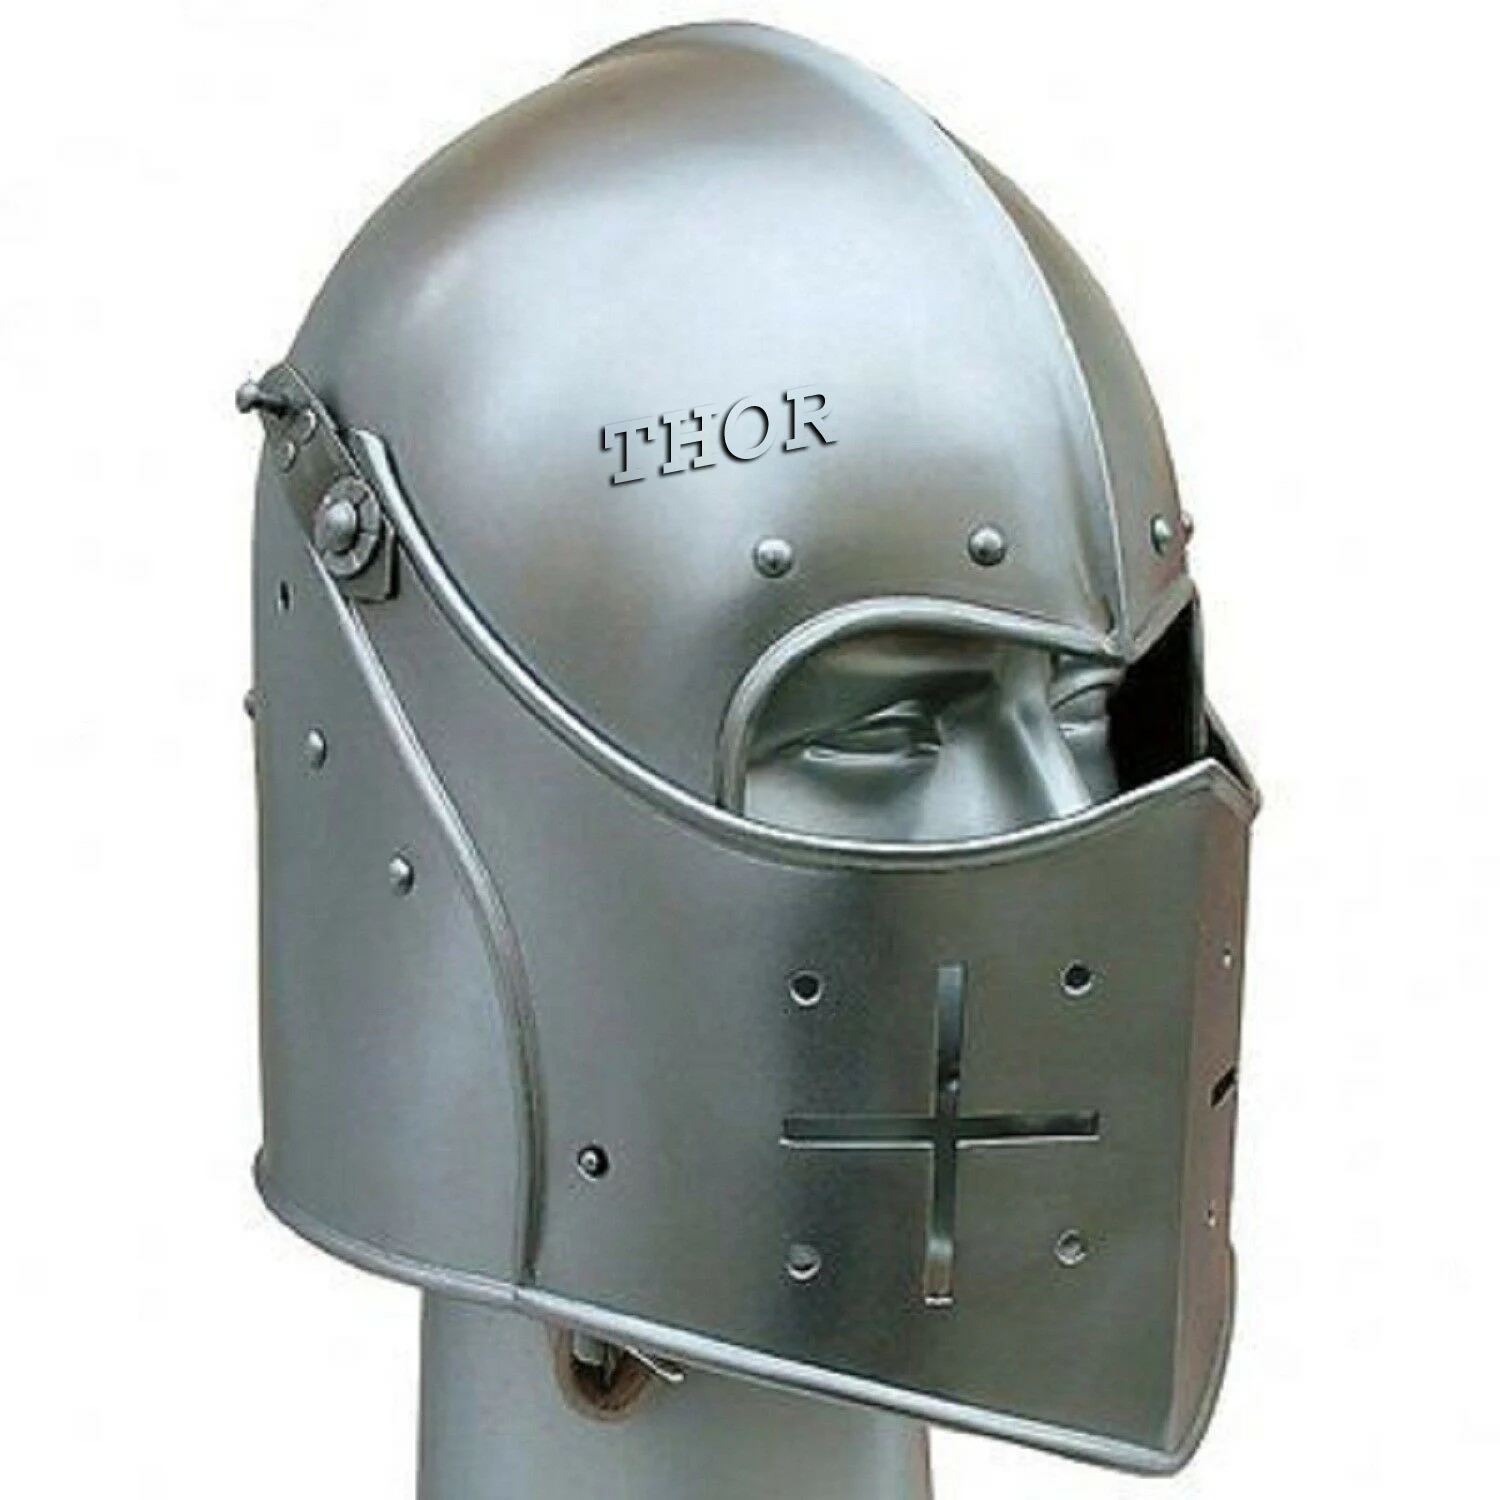 STAND Details about   Halloween Medieval Barbuta Helmet Knight Templar Crusader Armour Helmet 